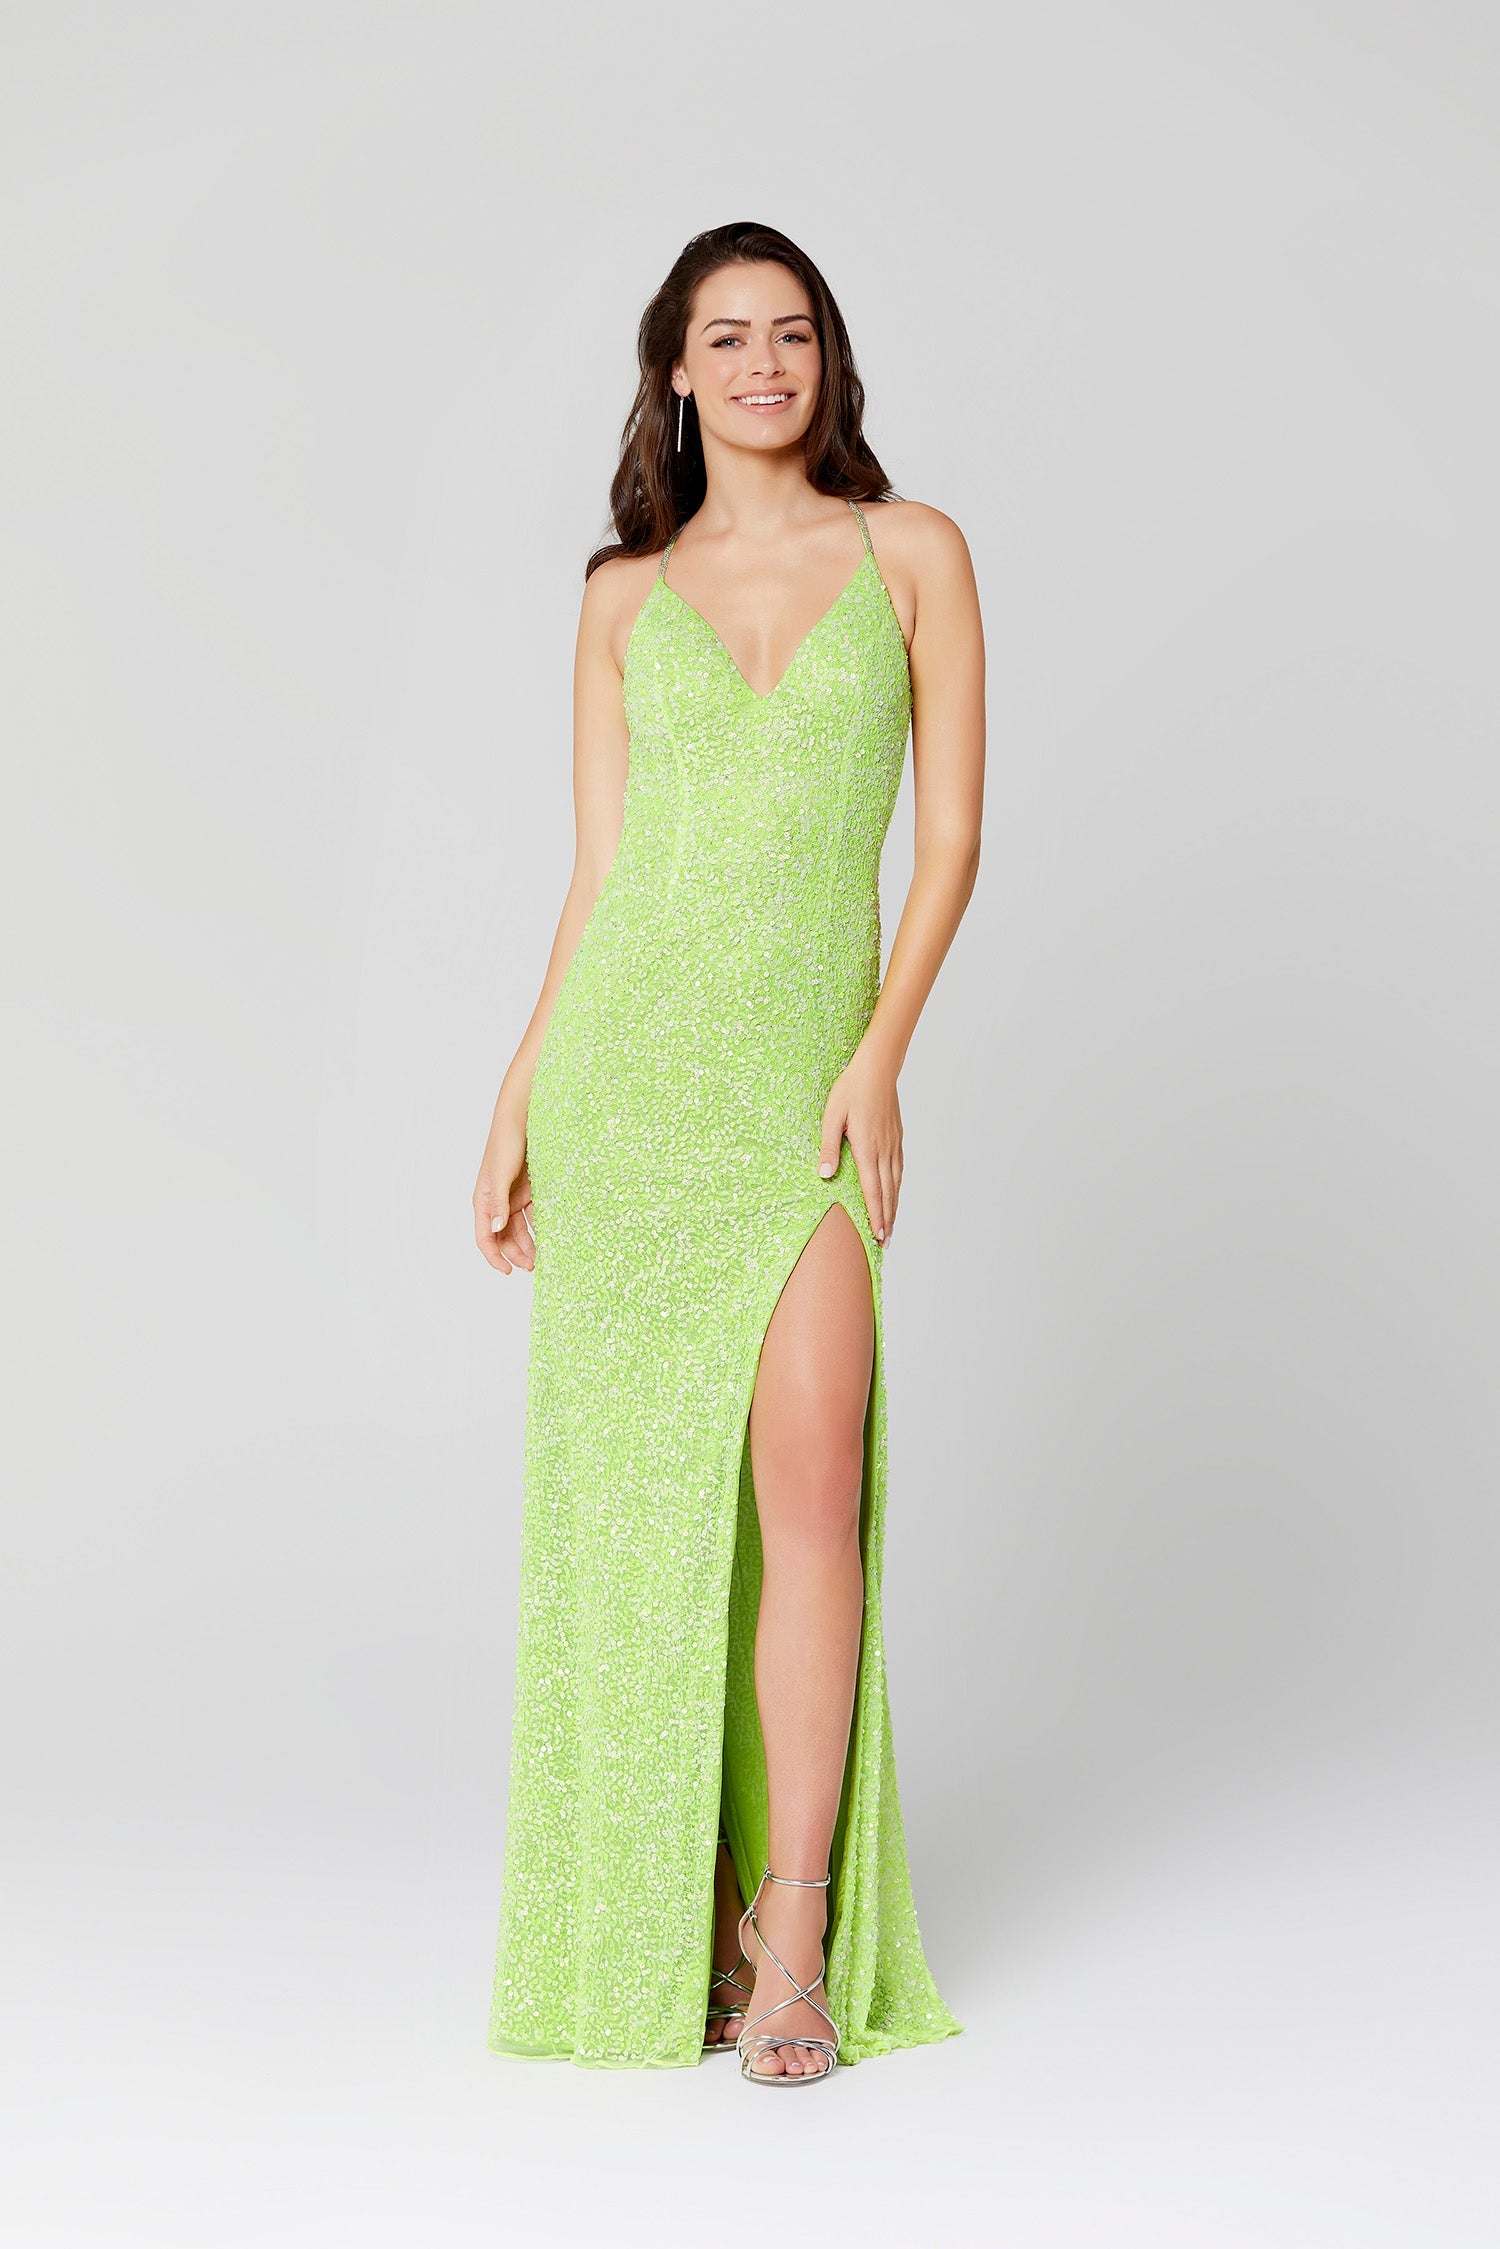 13+ Neon Green Formal Dress